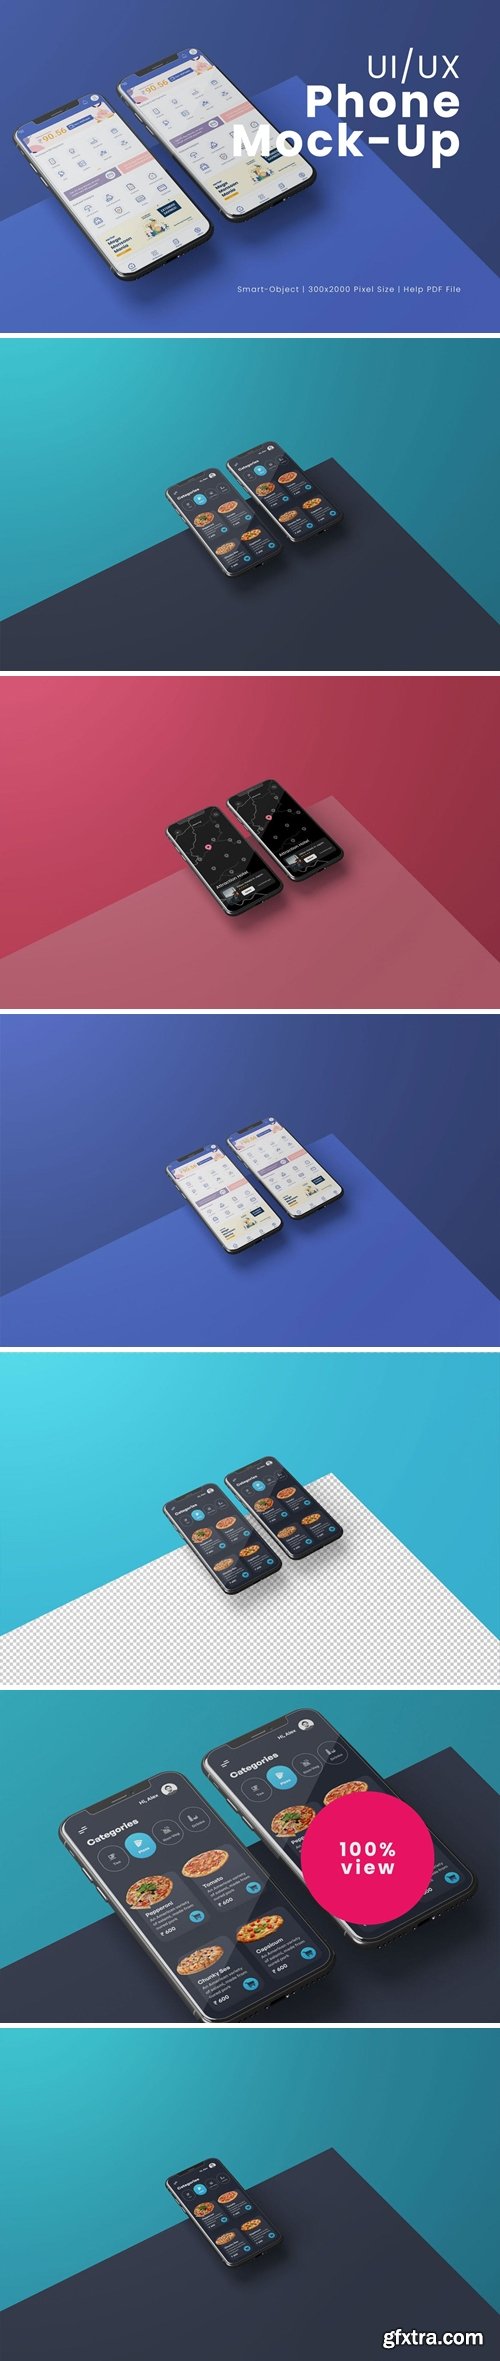 UI/UX Phone Mockup